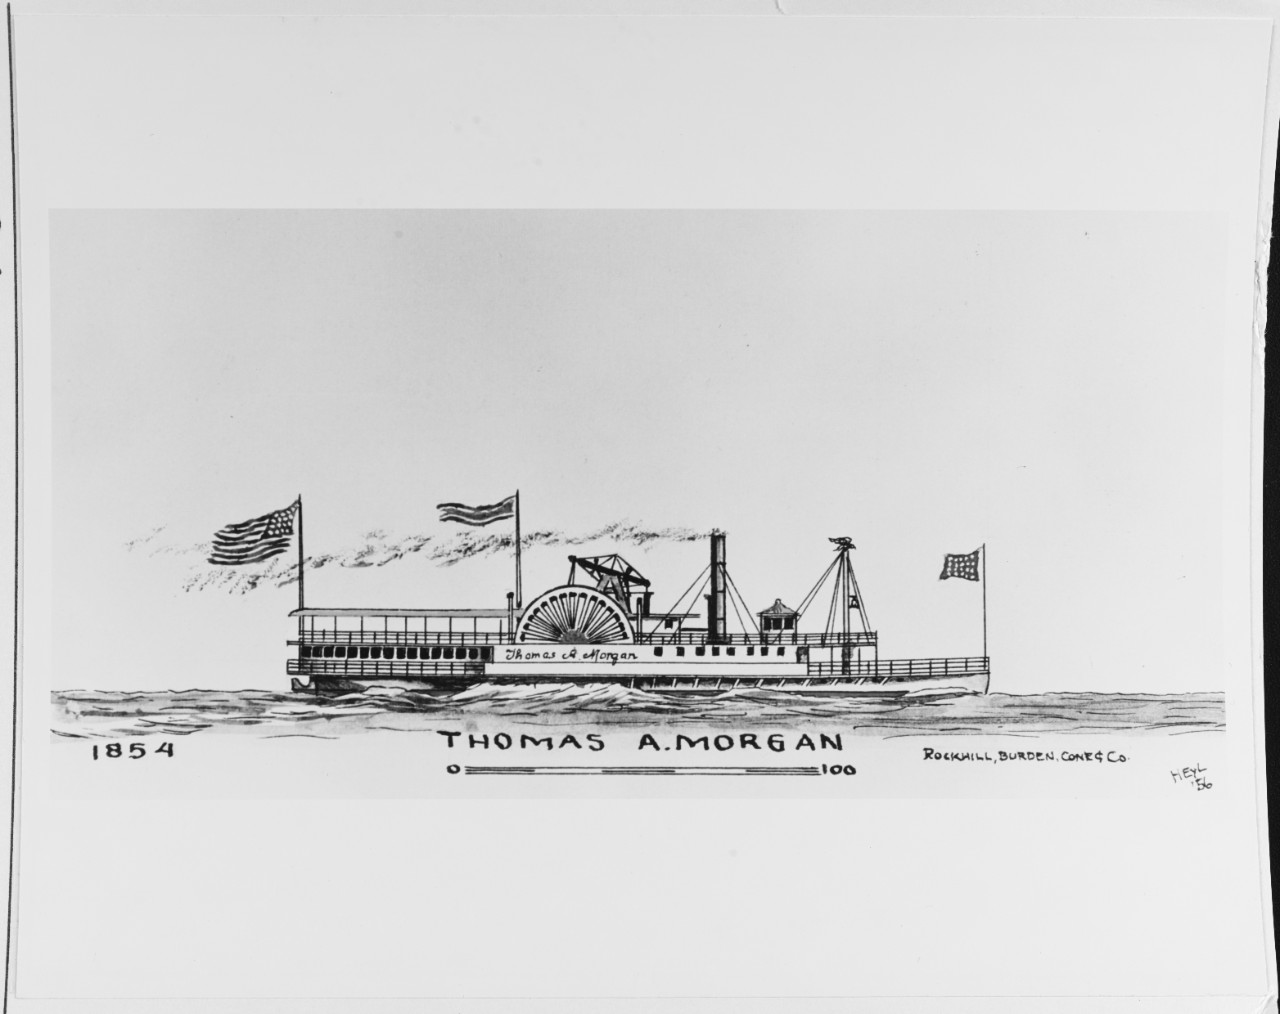 THOMAS A. MORGAN (American merchant steamer, 1854-1903)